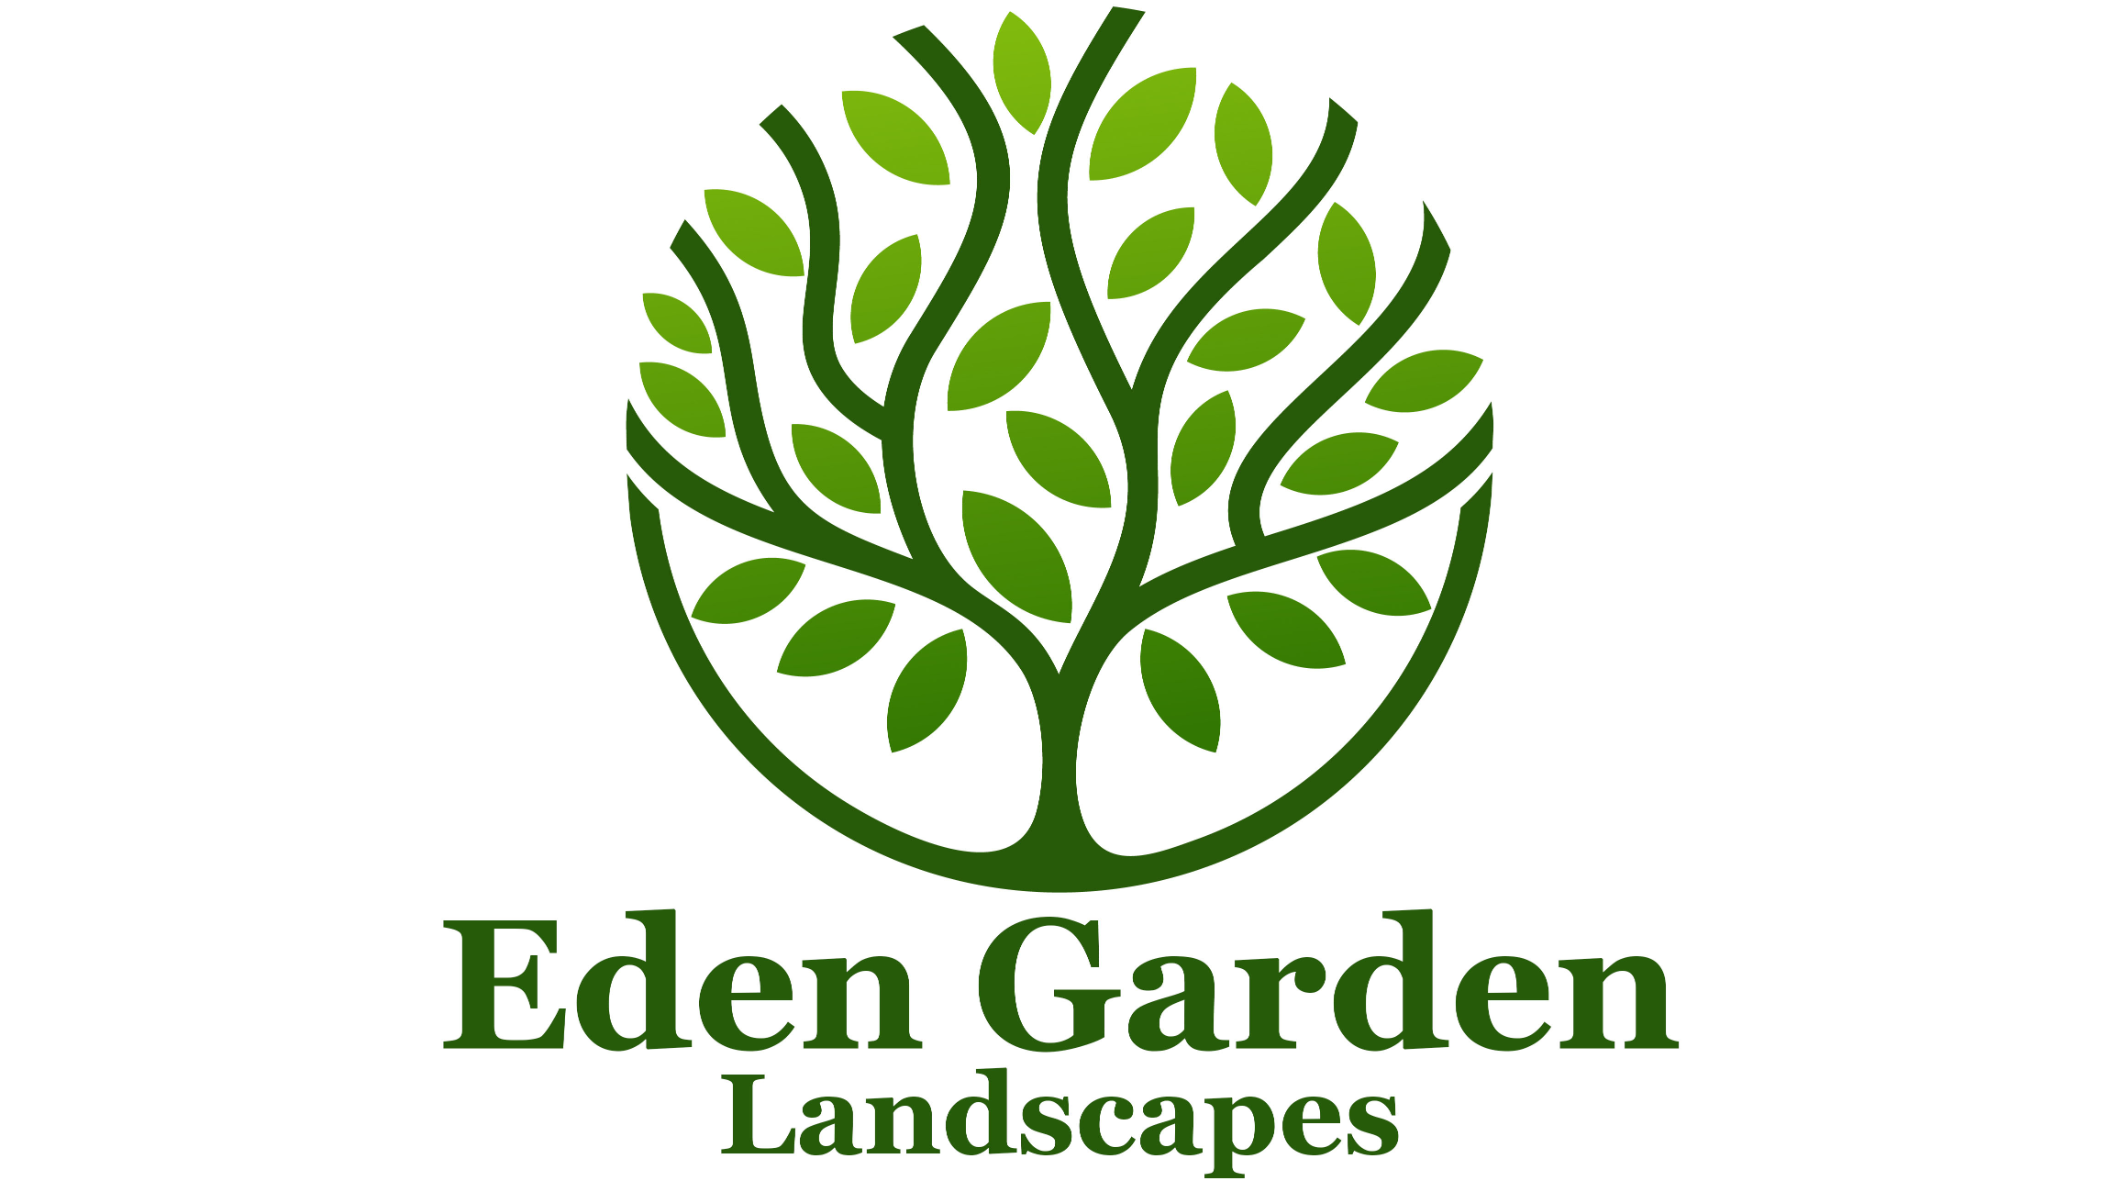 Eden garden landscapes - Colchester, Essex CO4 5ZF - 07947 915448 | ShowMeLocal.com